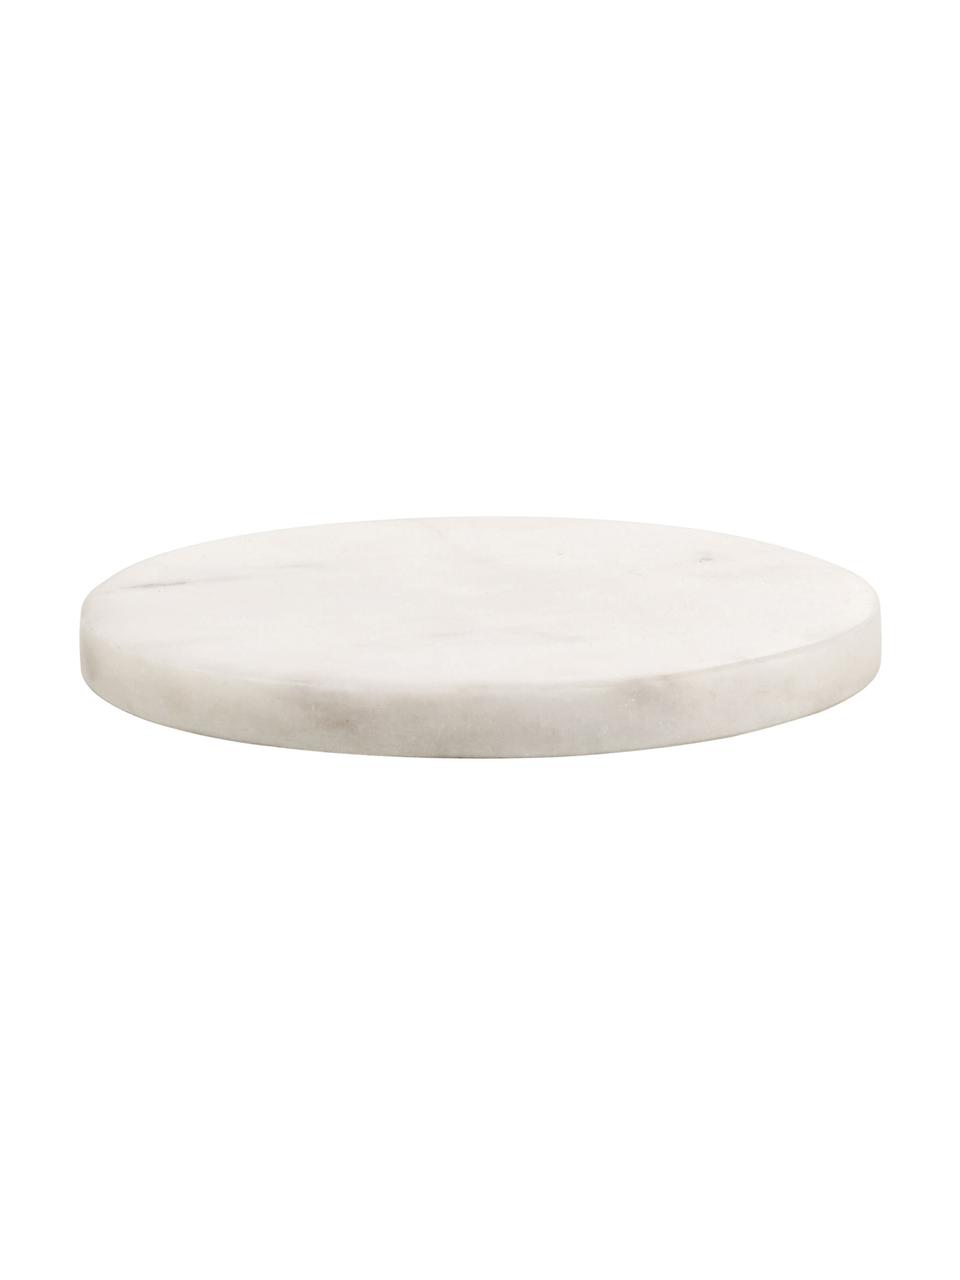 Sottobicchiere in marmo bianco Guda 4 pz, Marmo, Marmo bianco, Ø 10 cm